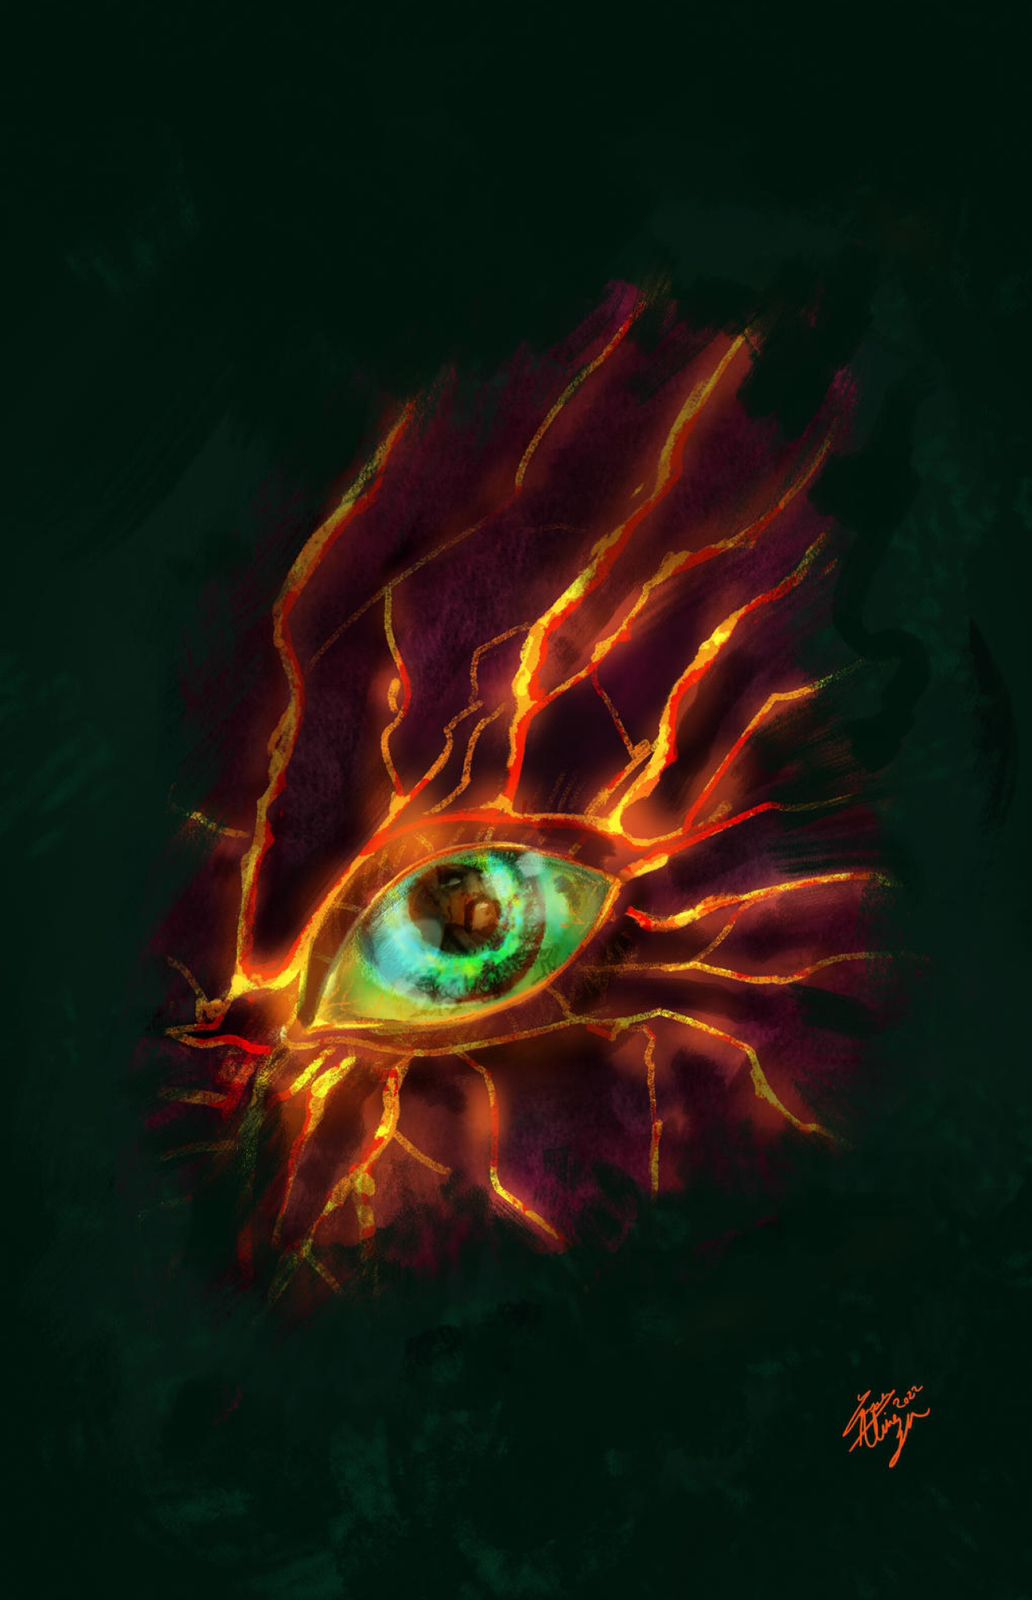 Wayl chapter 6 cover: the eye of ishkode